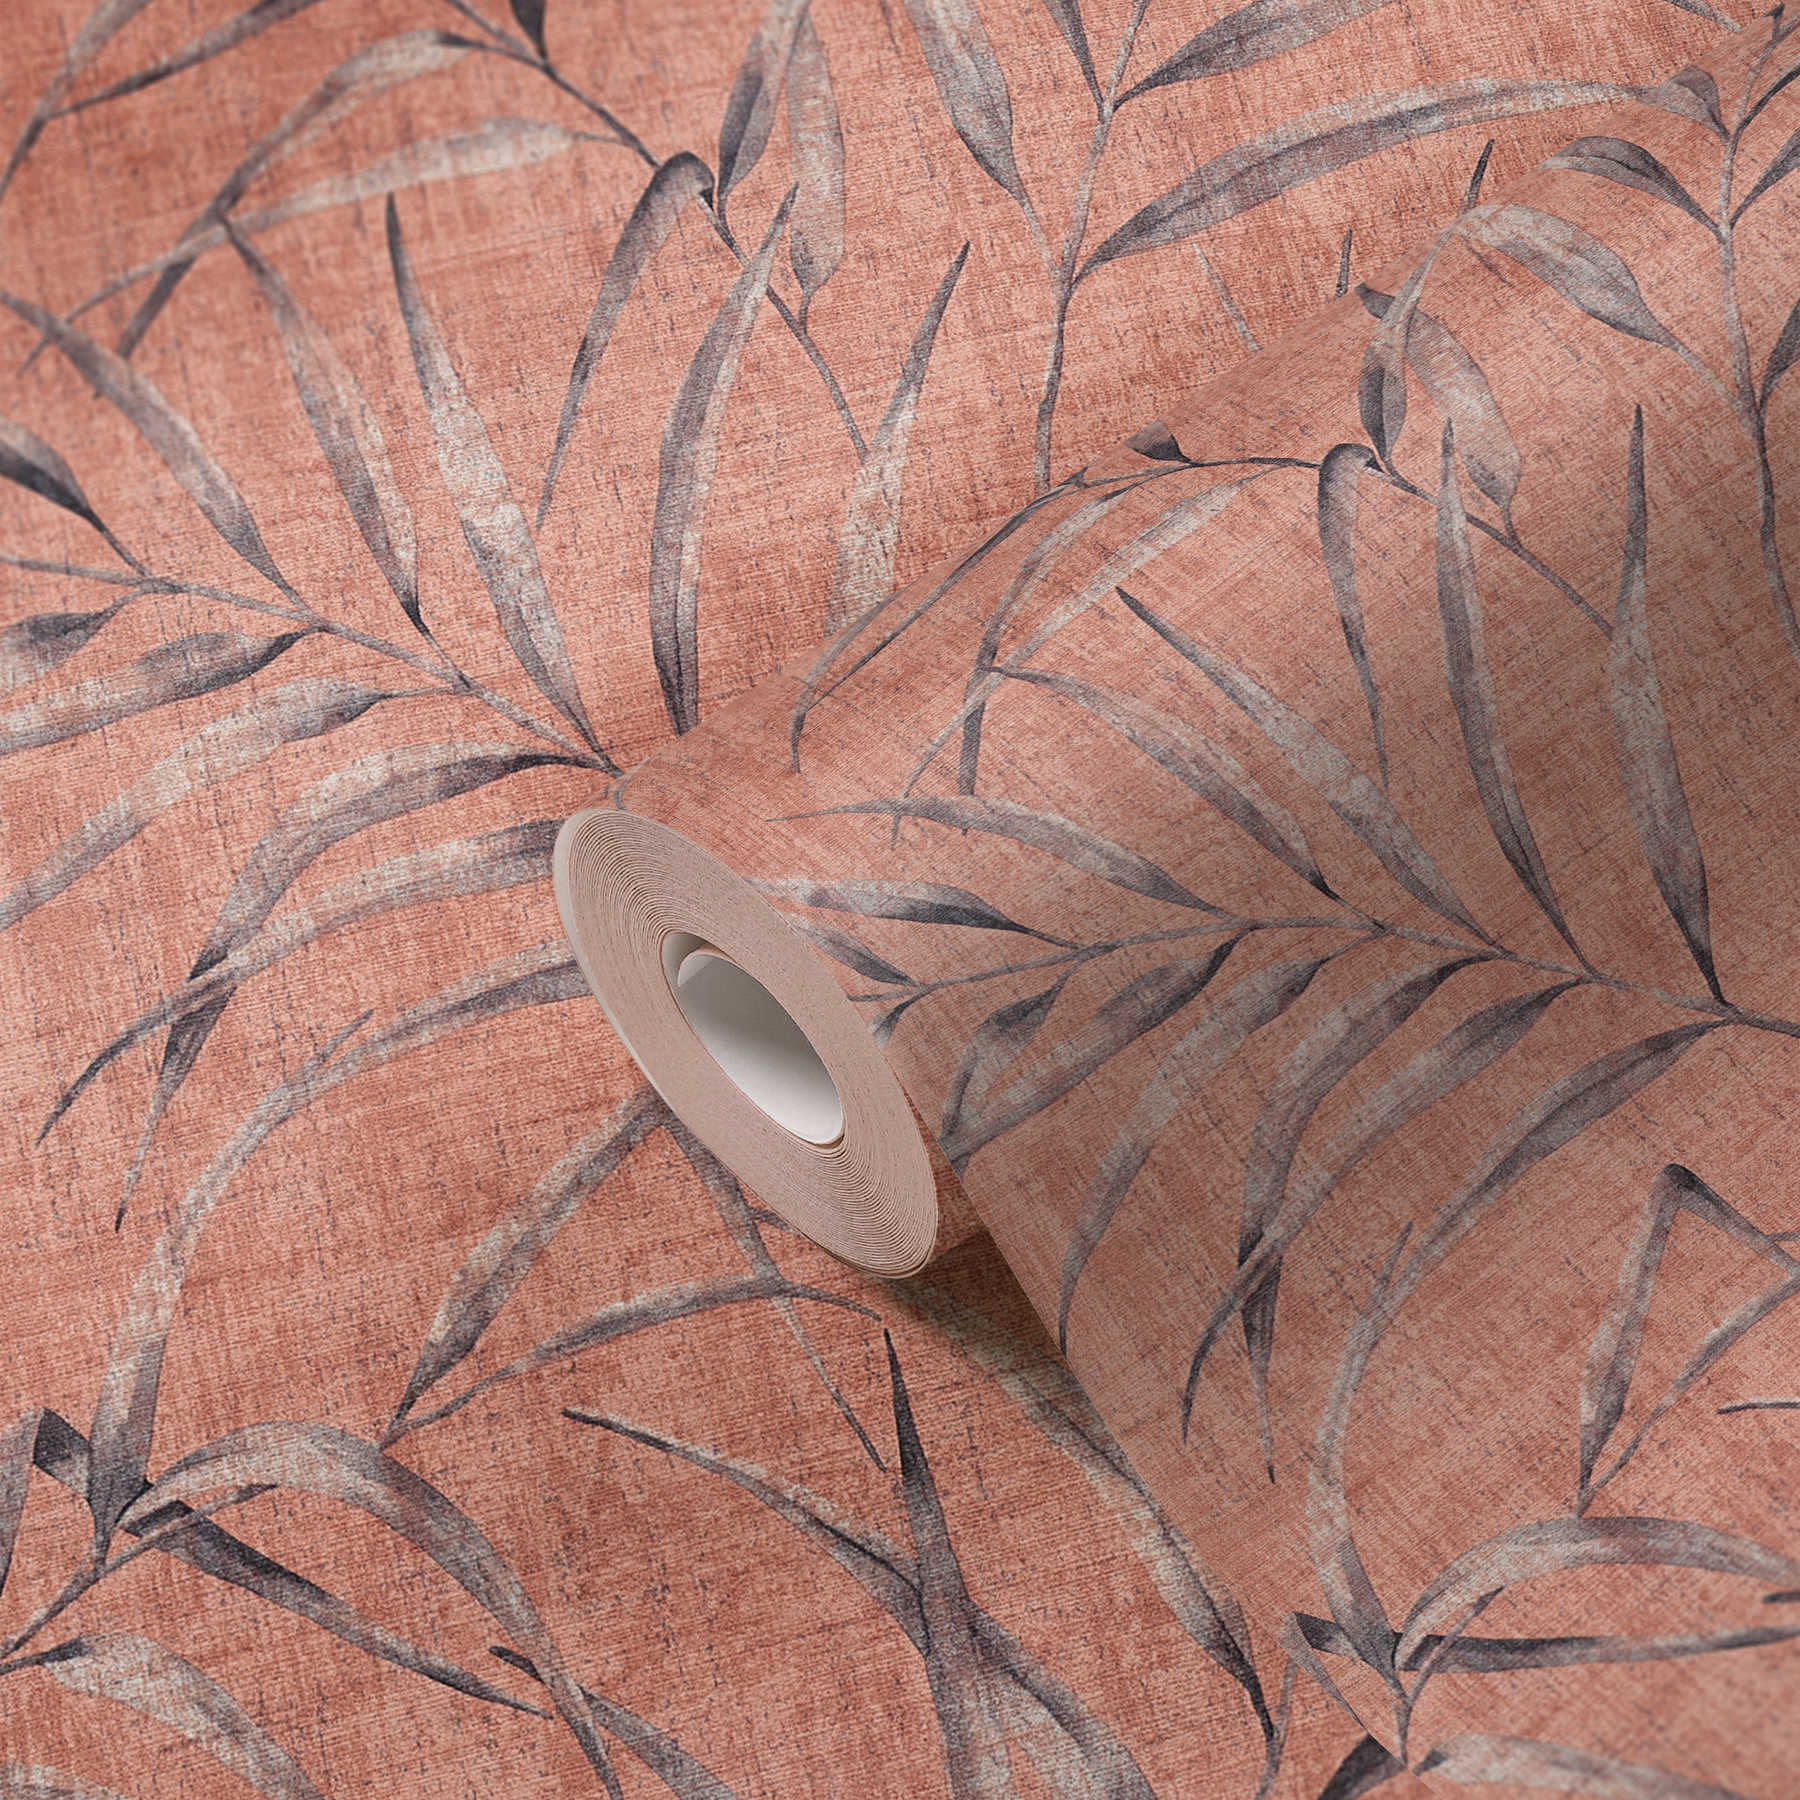             Wallpaper leaf pattern & linen look - pink, orange, red
        